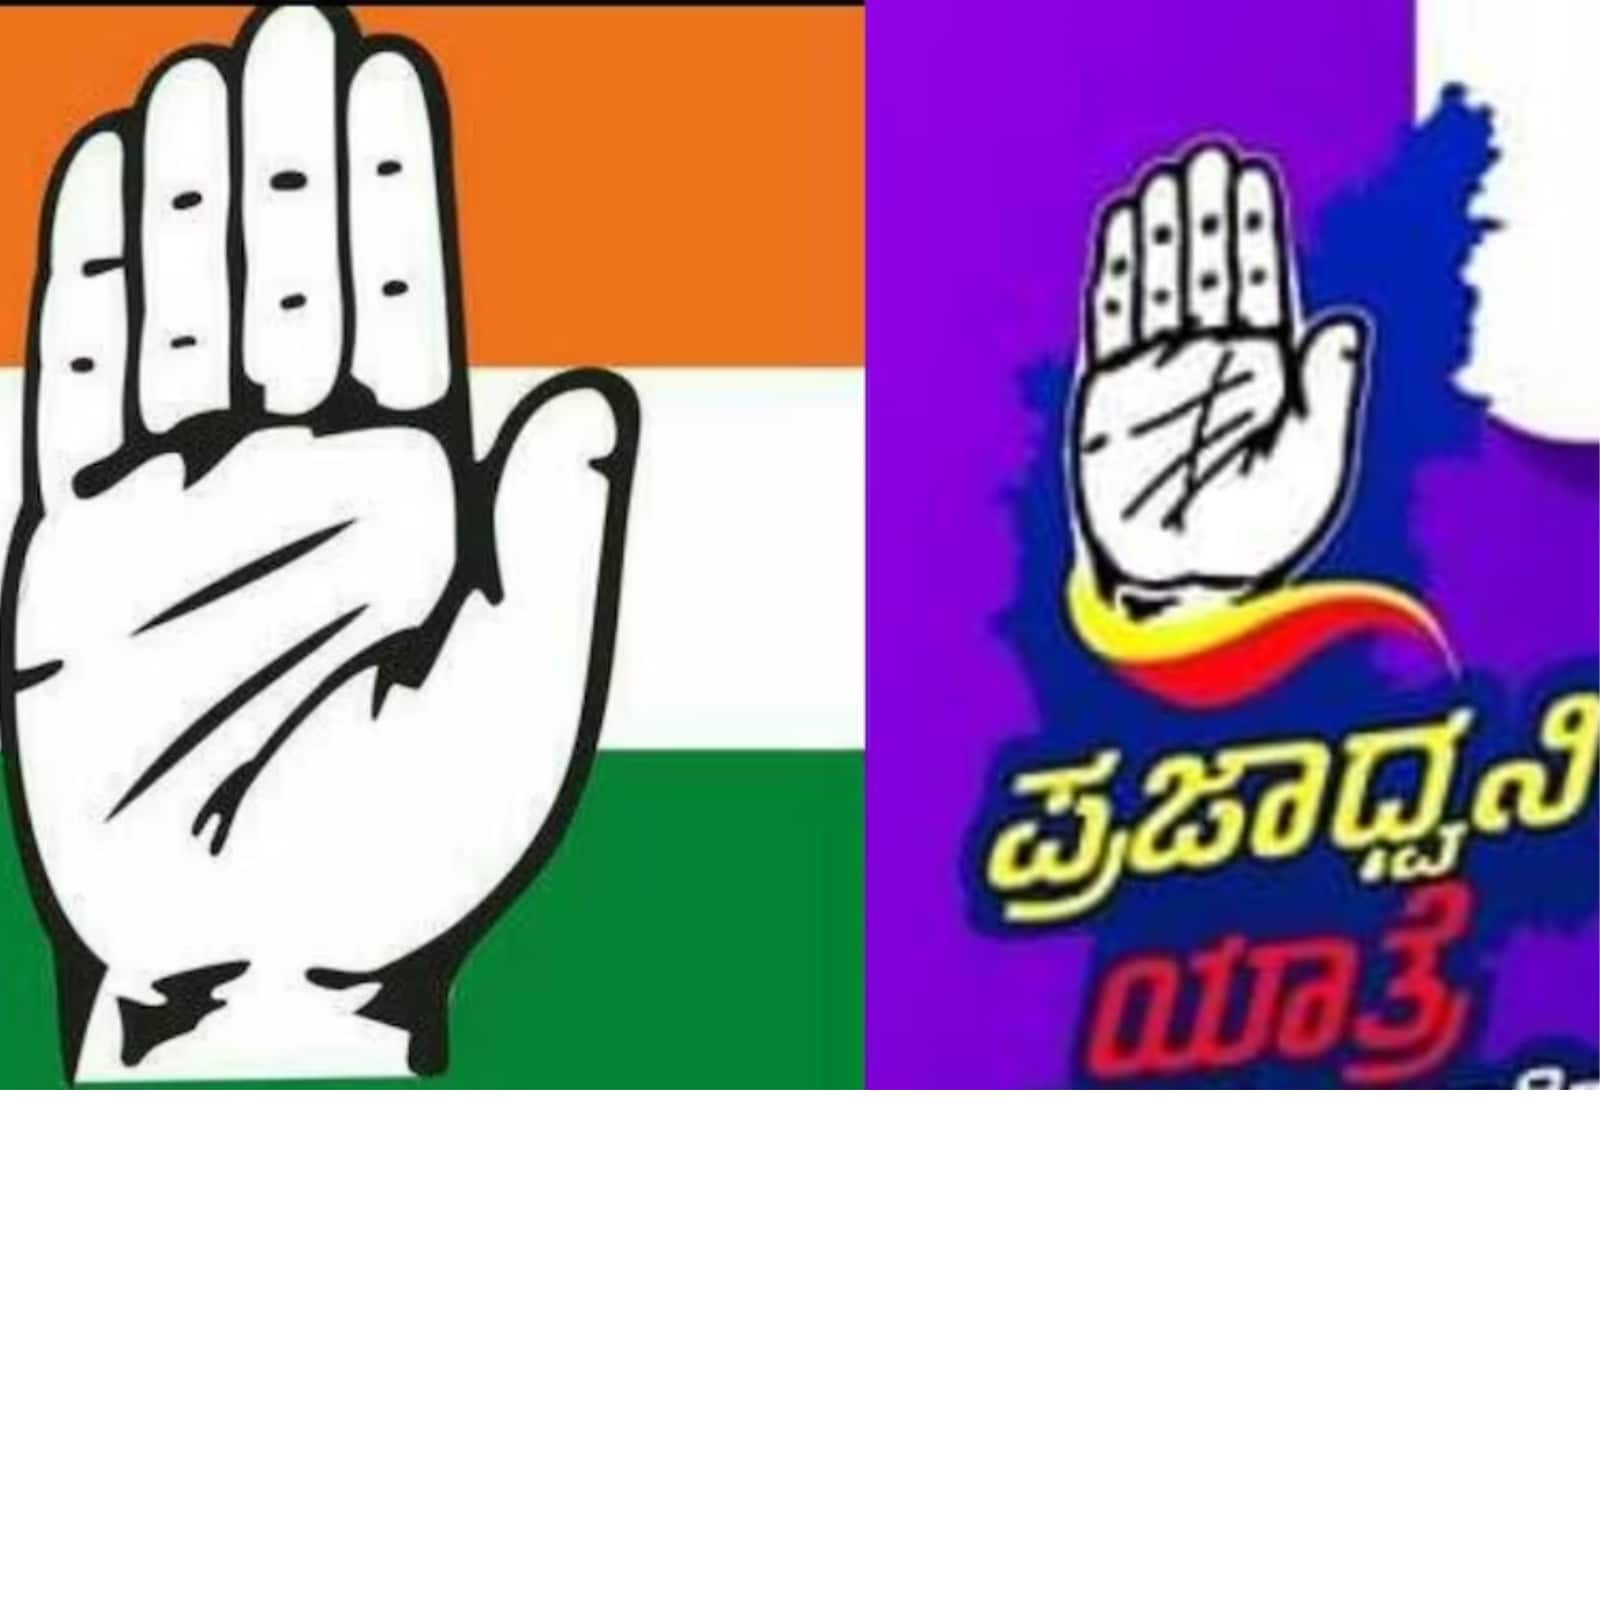 Congress has a new variant of the palm symbol at DK Shivakumar's rally